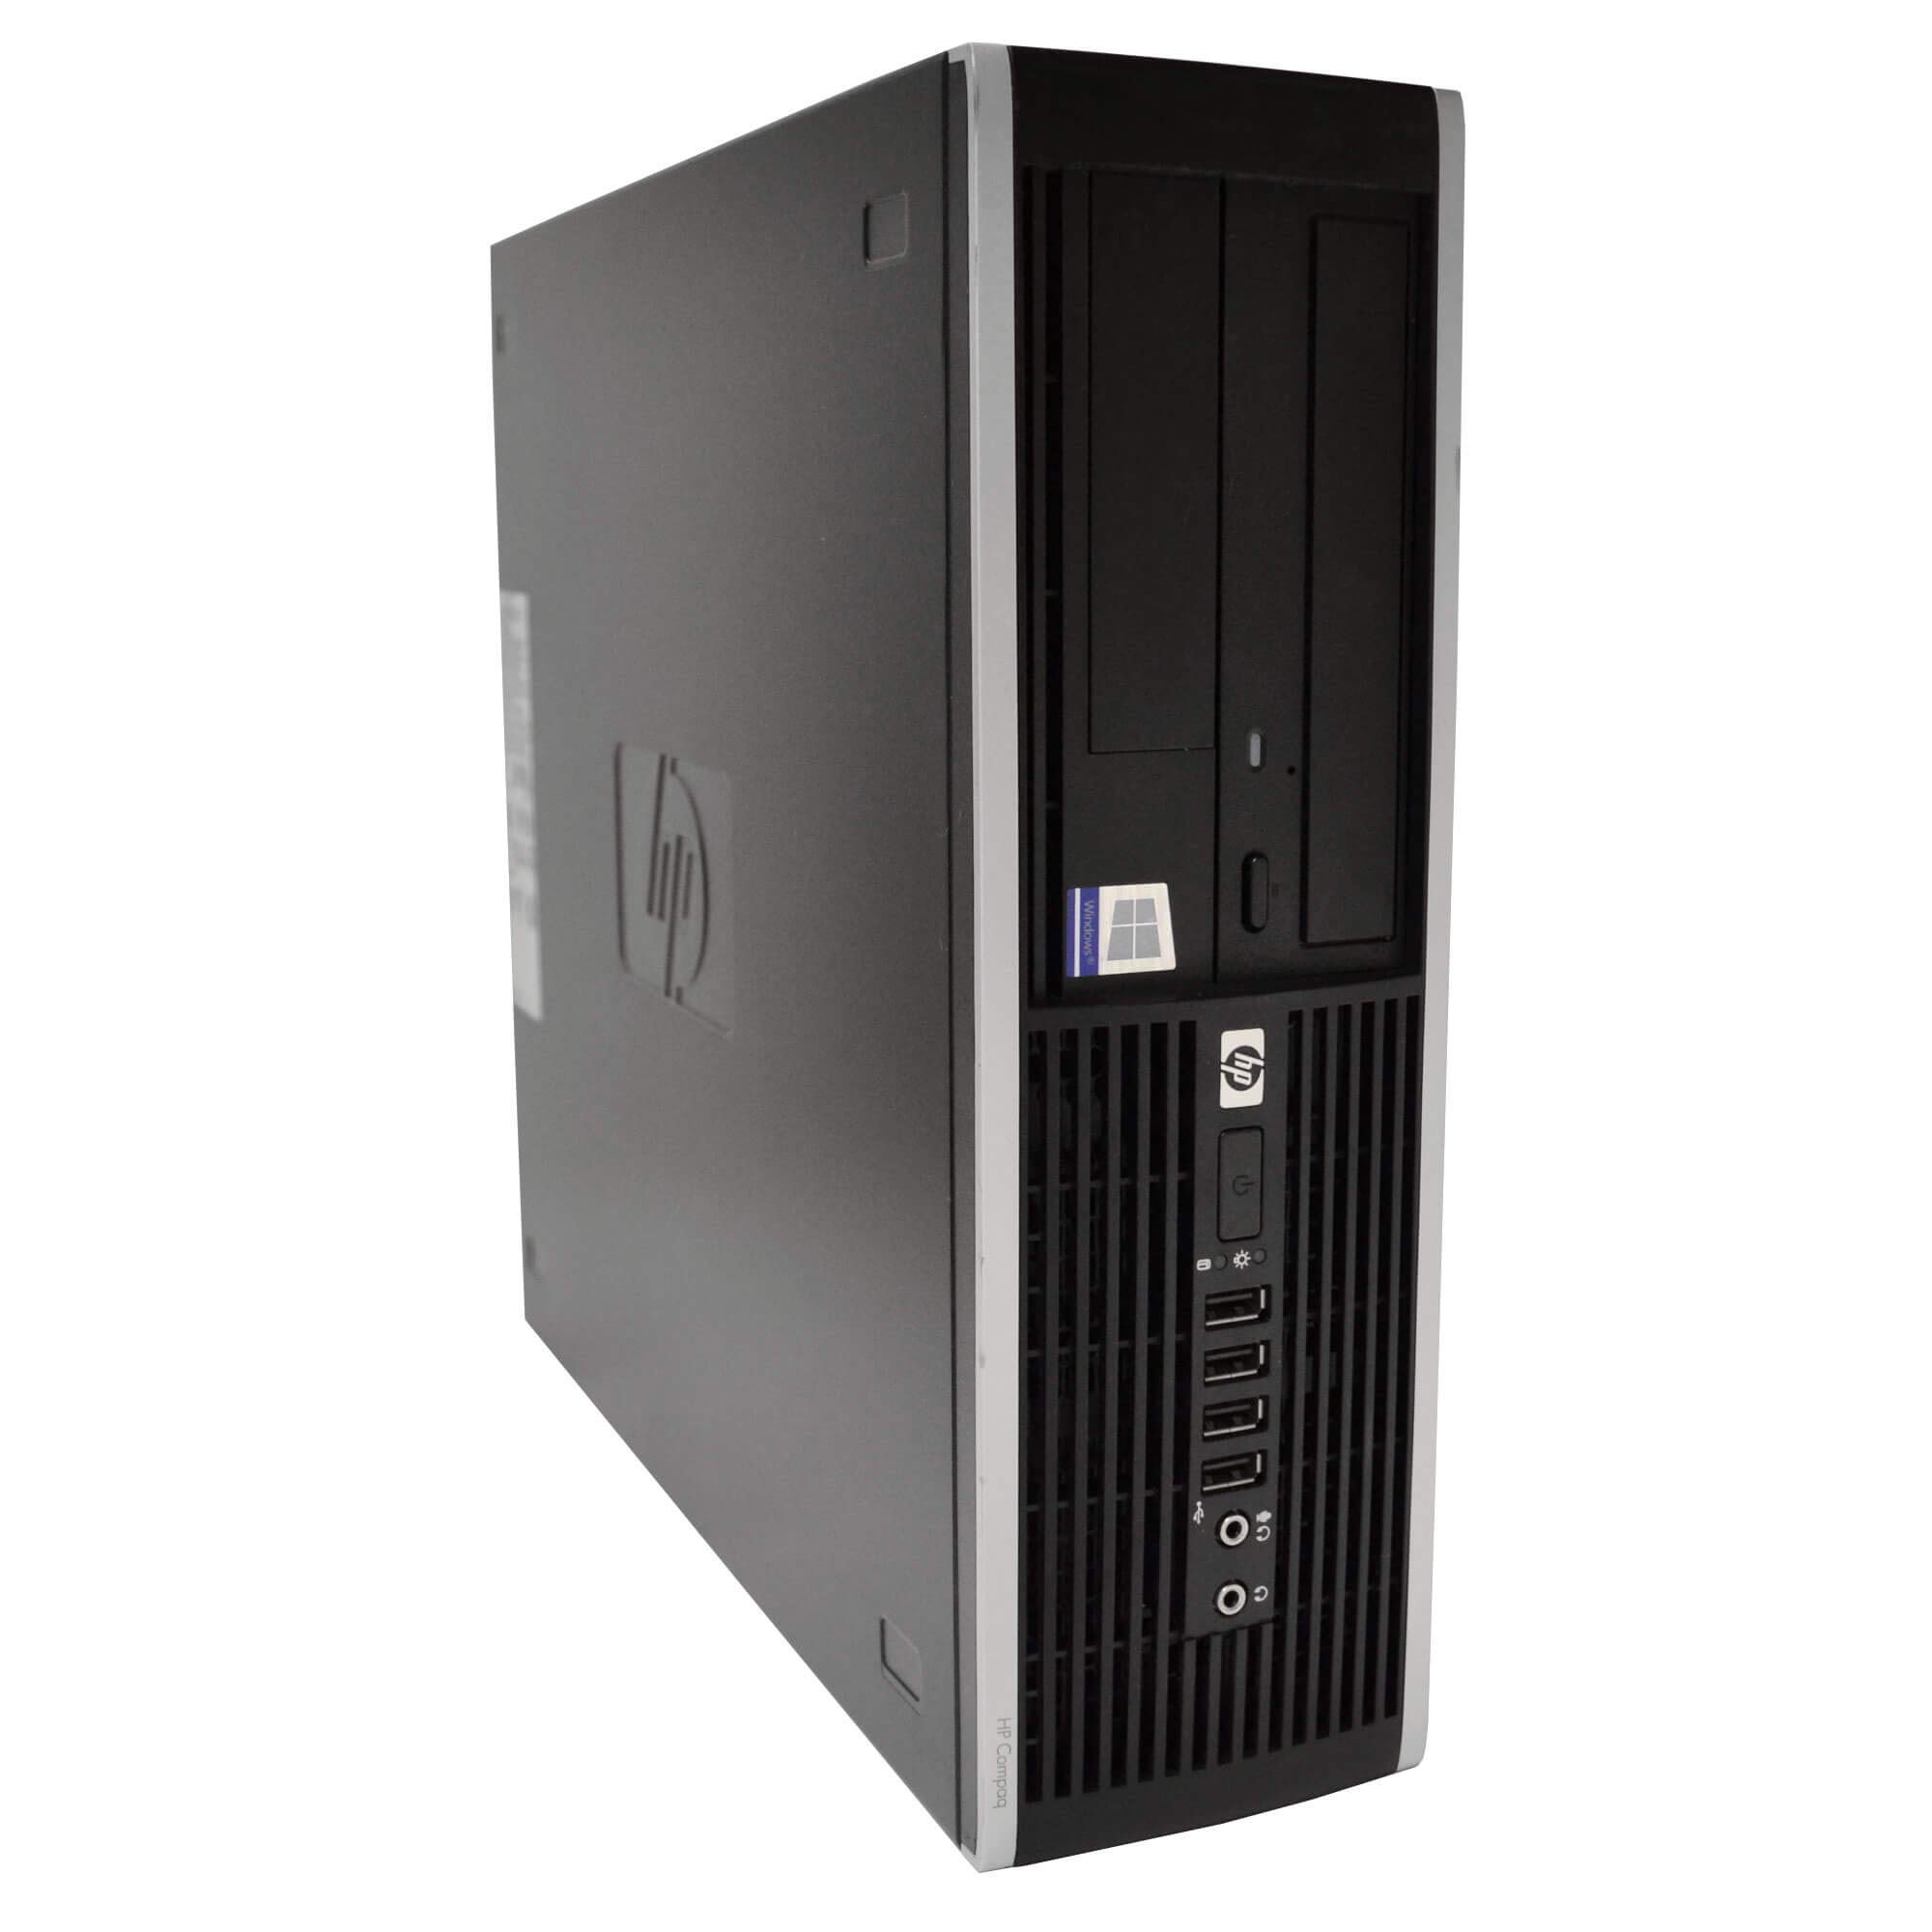 HP Elite 8100 Desktop Computer Package - Intel Core i5 3.2-GHz, 8GB RAM, 500GB Hard Drive, 19 Inch LCD, Keyboard, Mouse, DVD, WiFi, Windows 10 Professional (Renewed)